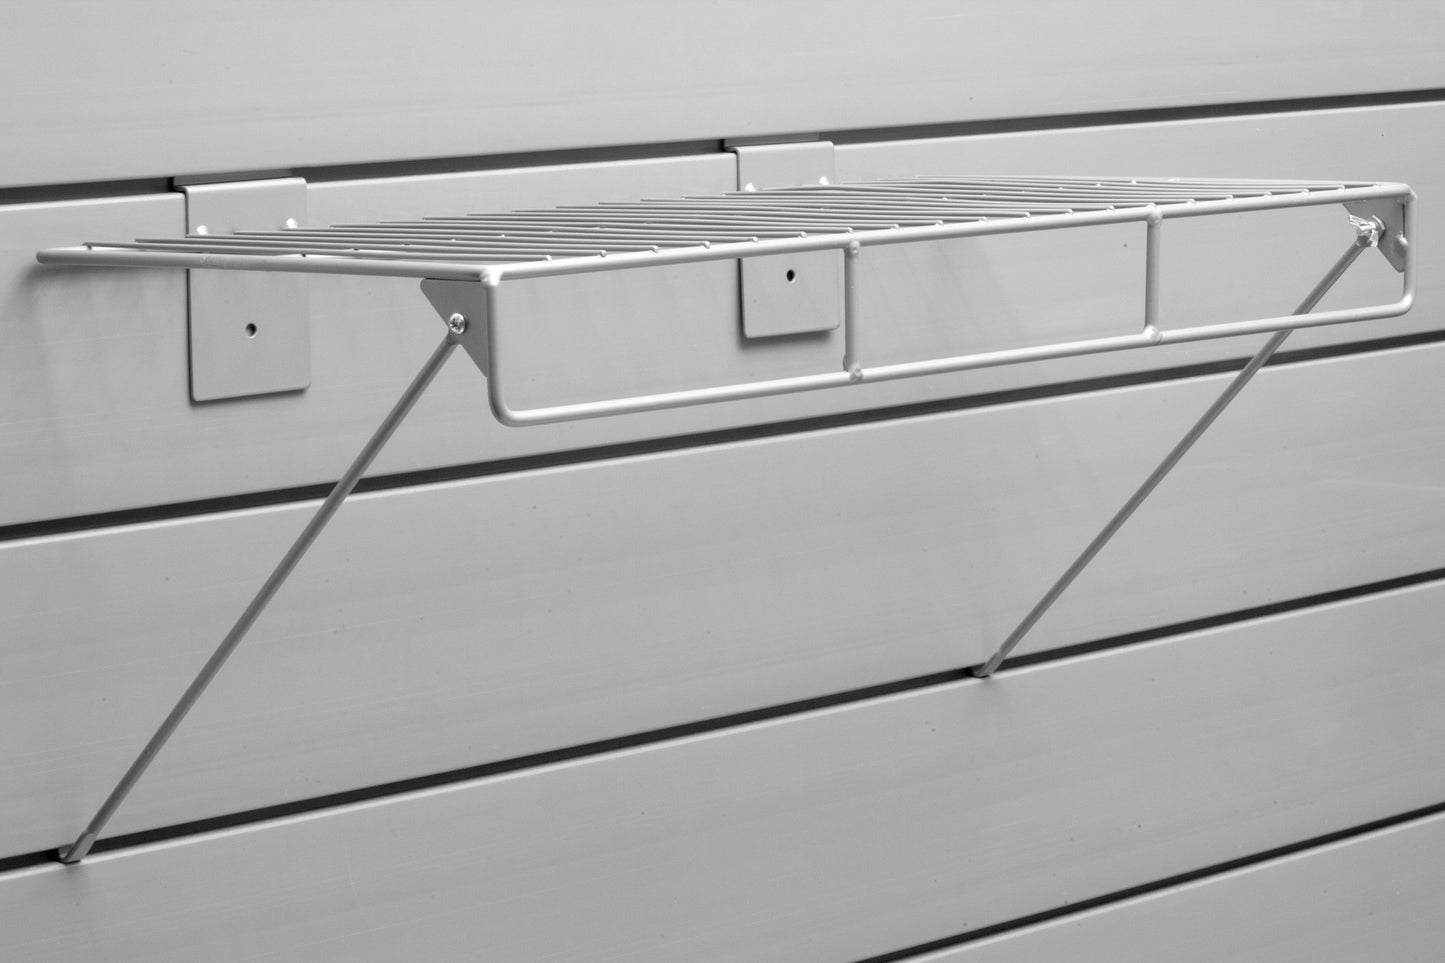 CrownWall 12" x 24" Wire Shelf with Rail (6 per box)